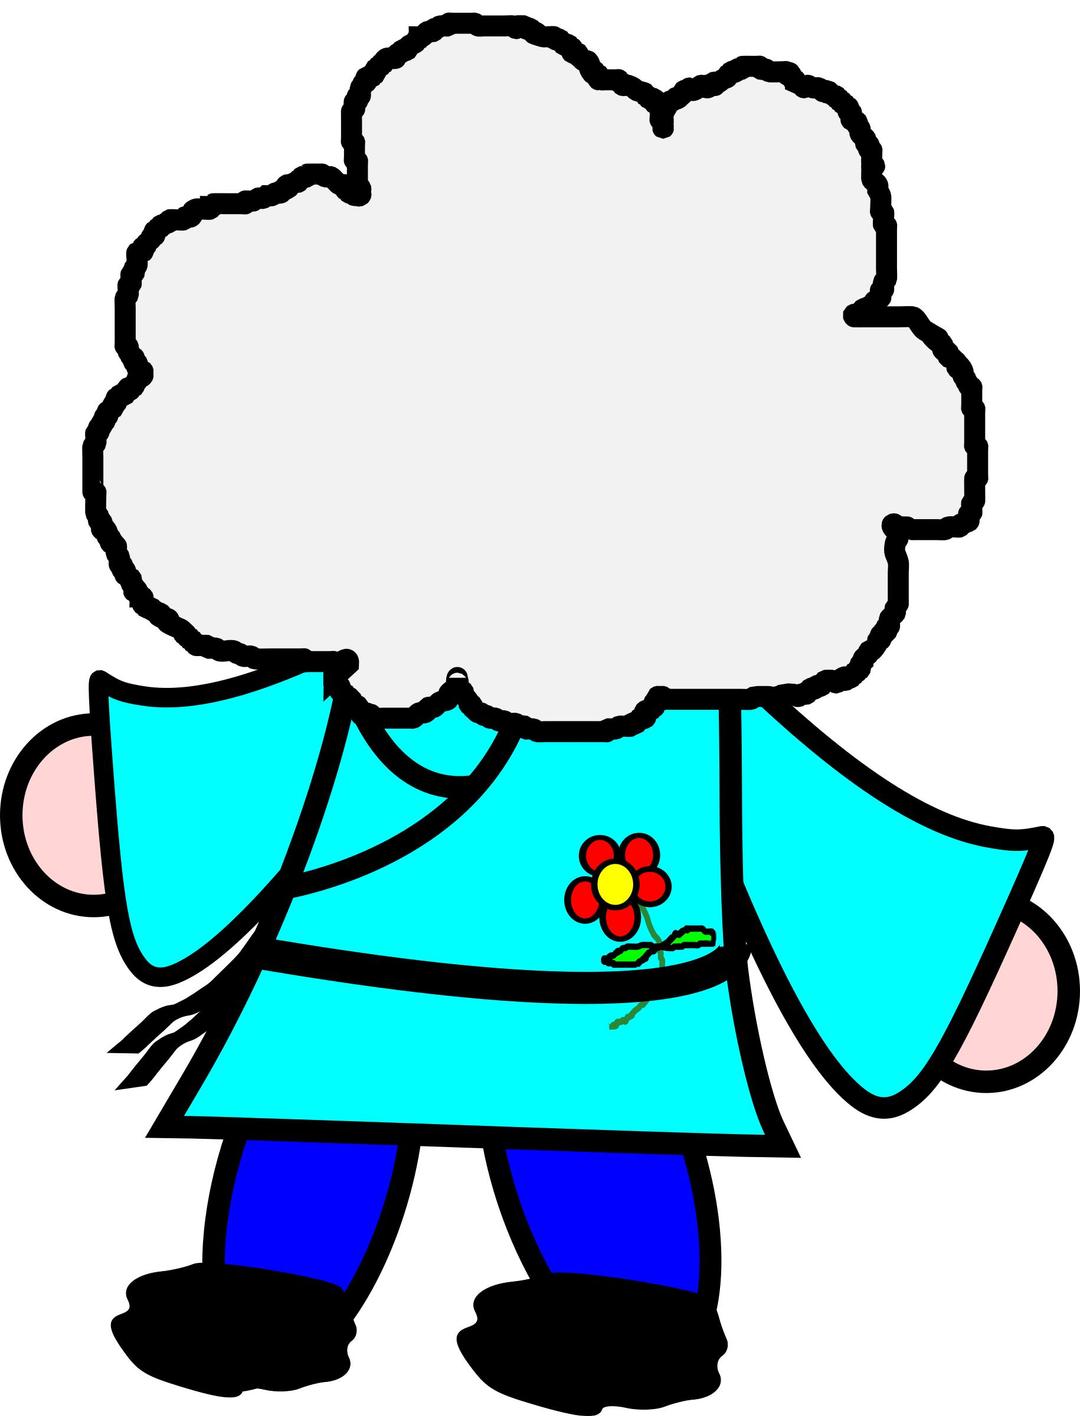 Mr Cloud png transparent